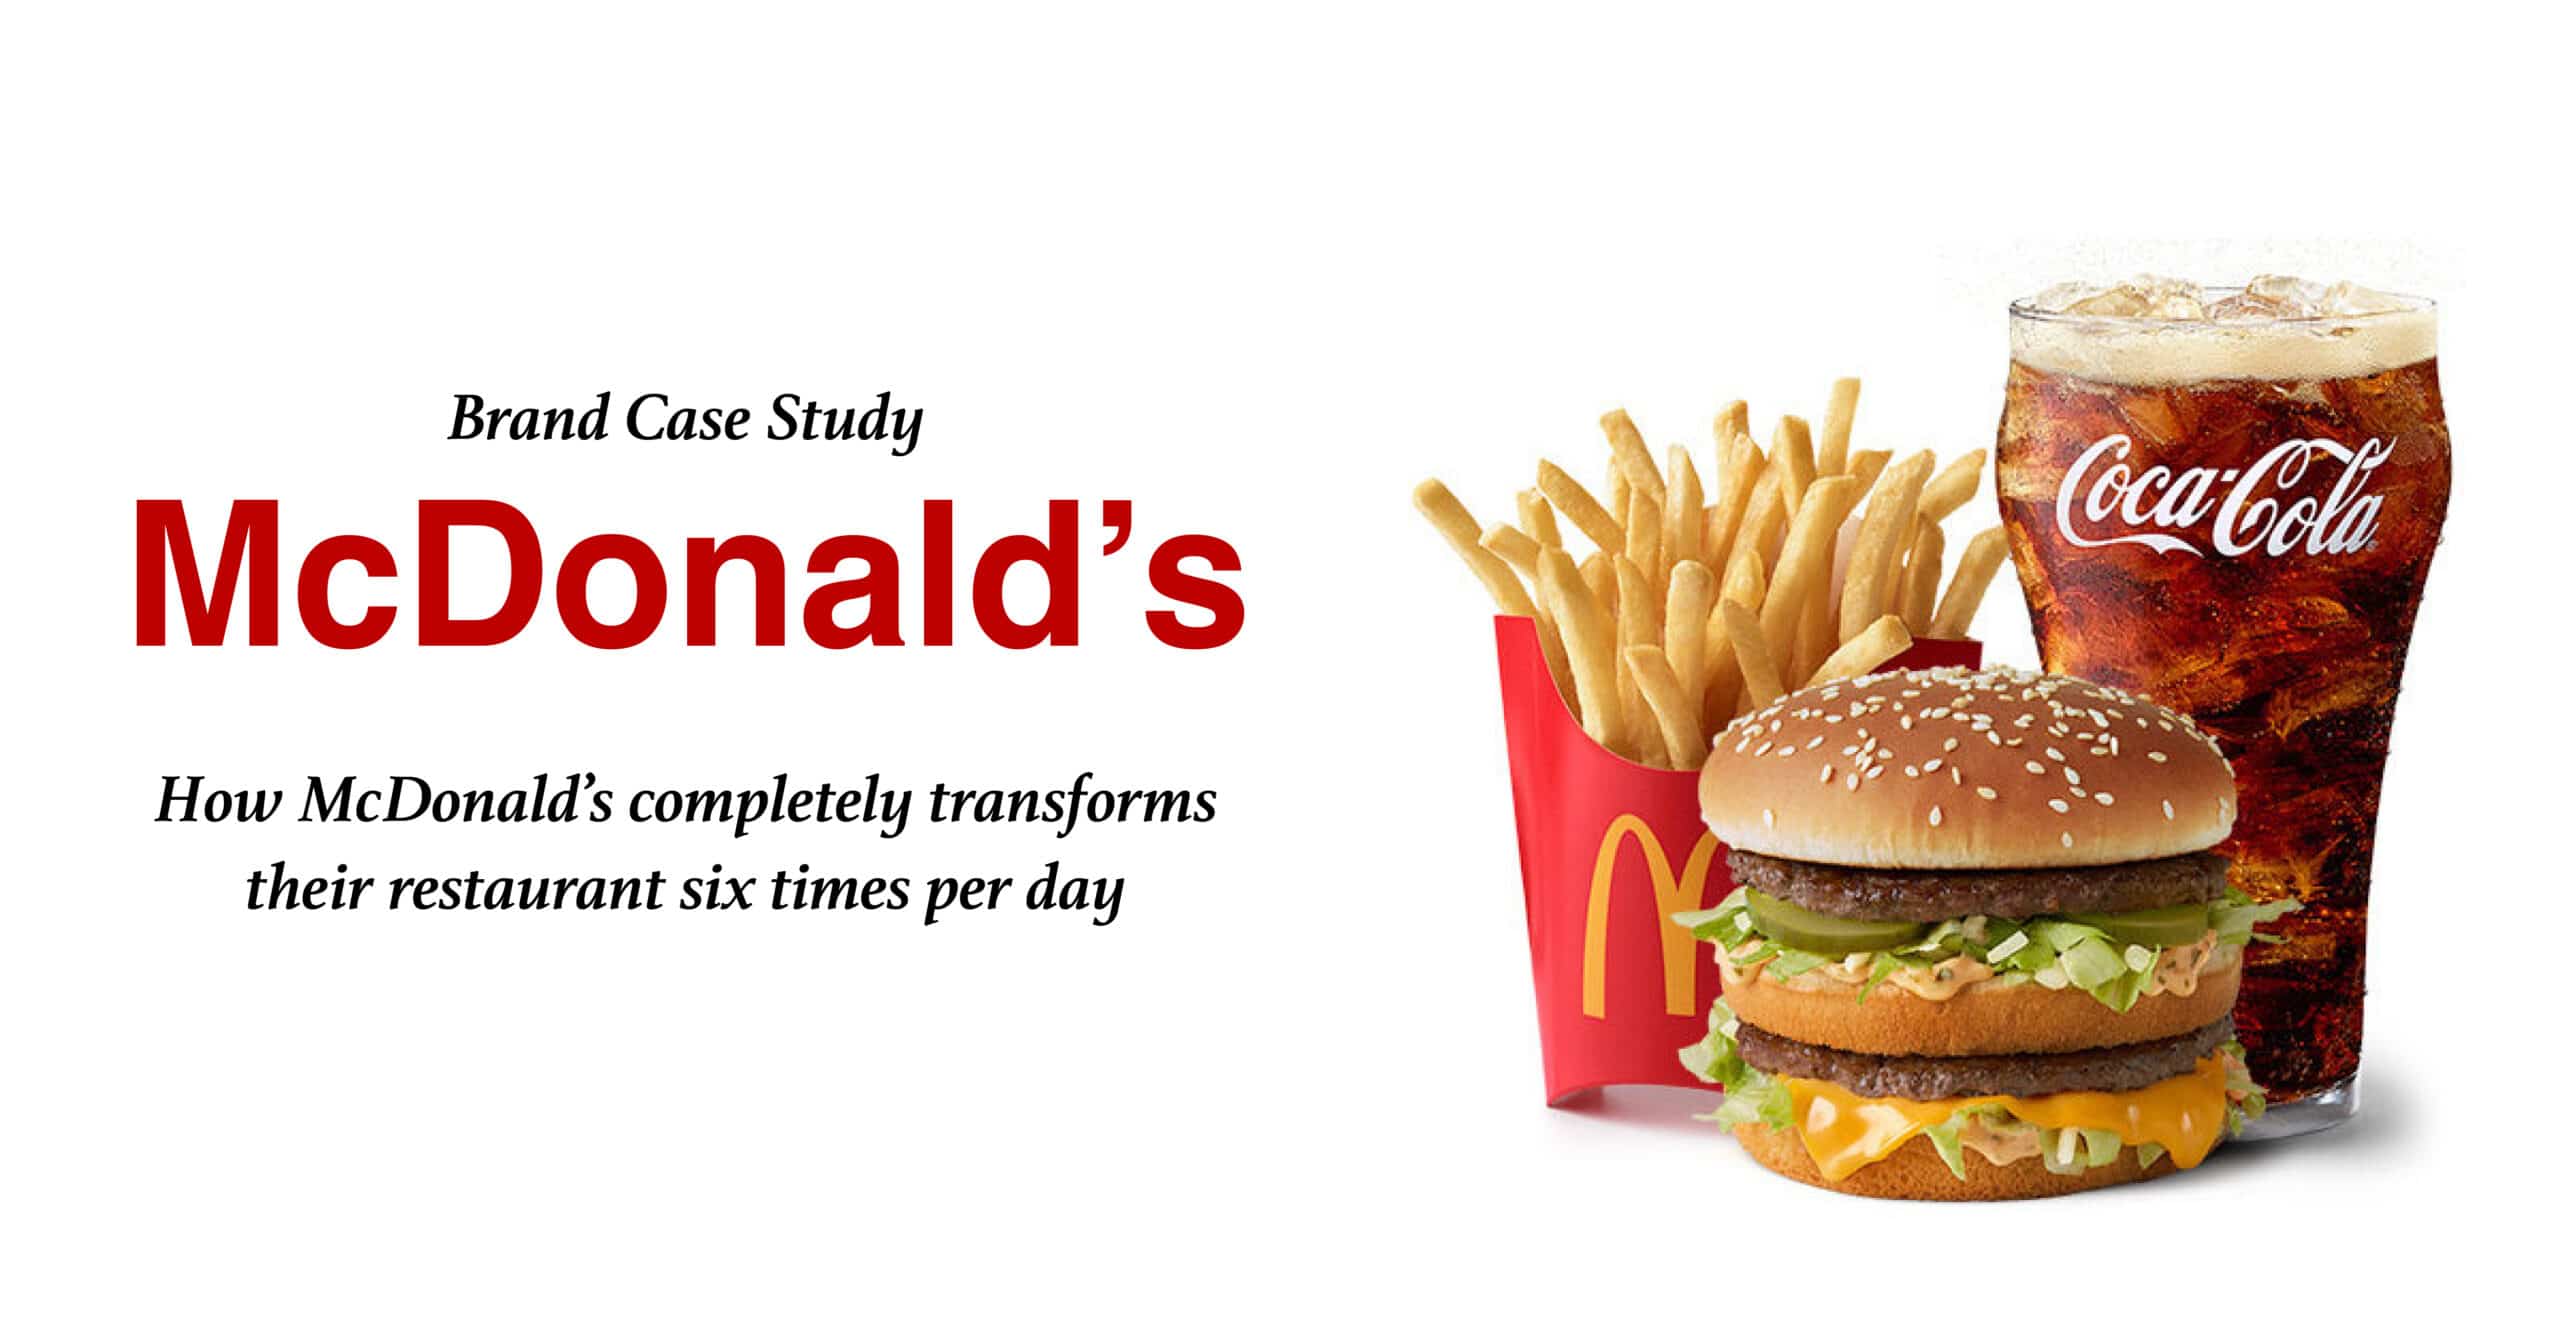 McDonald's brand case study